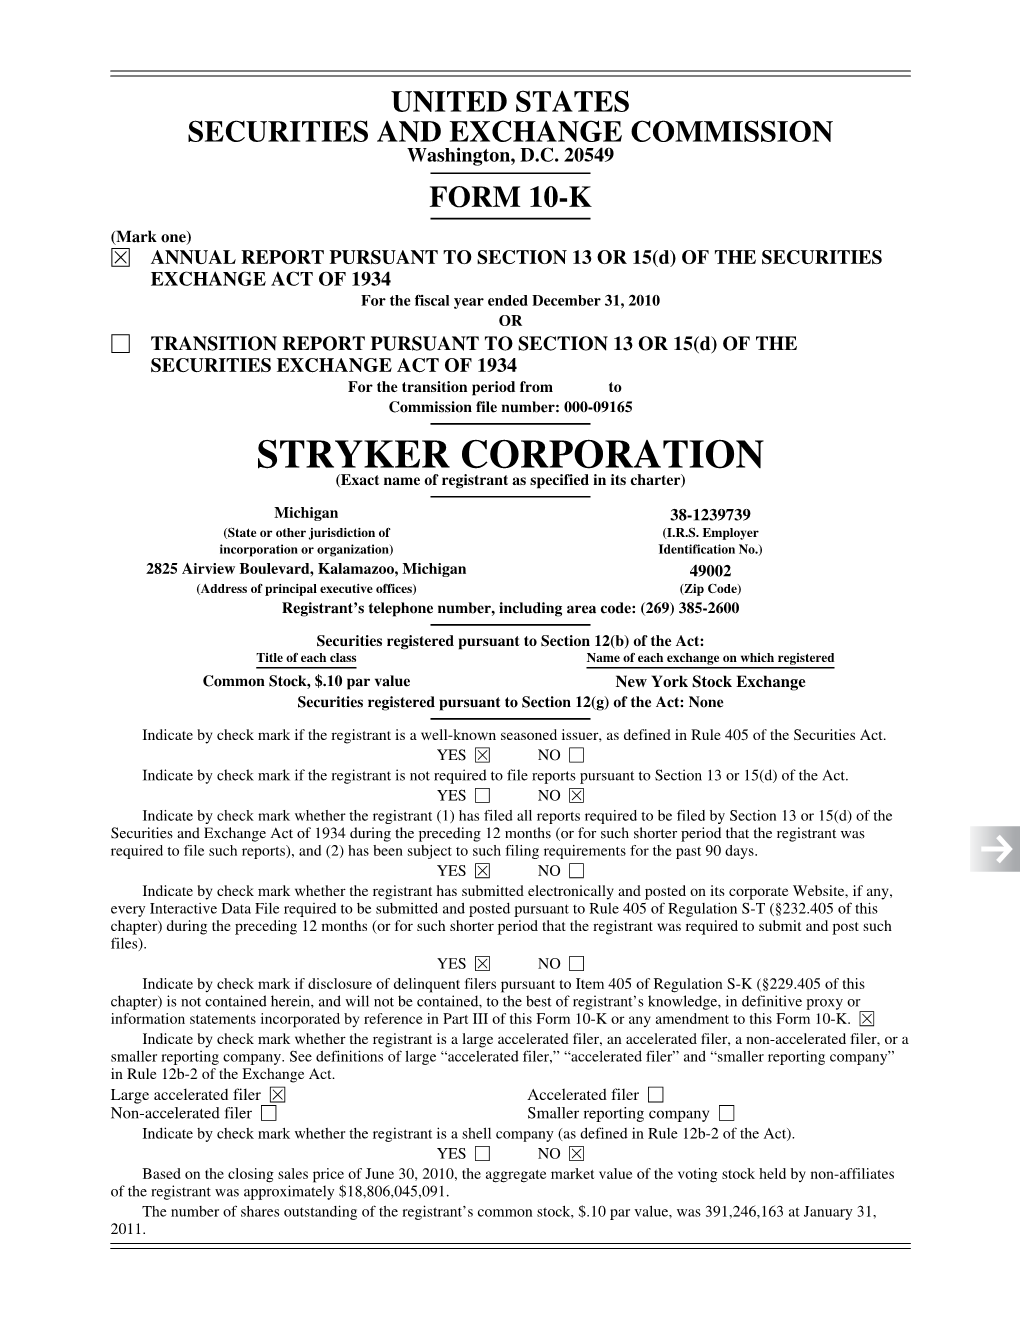 Stryker Corporation Form 10-K 2010